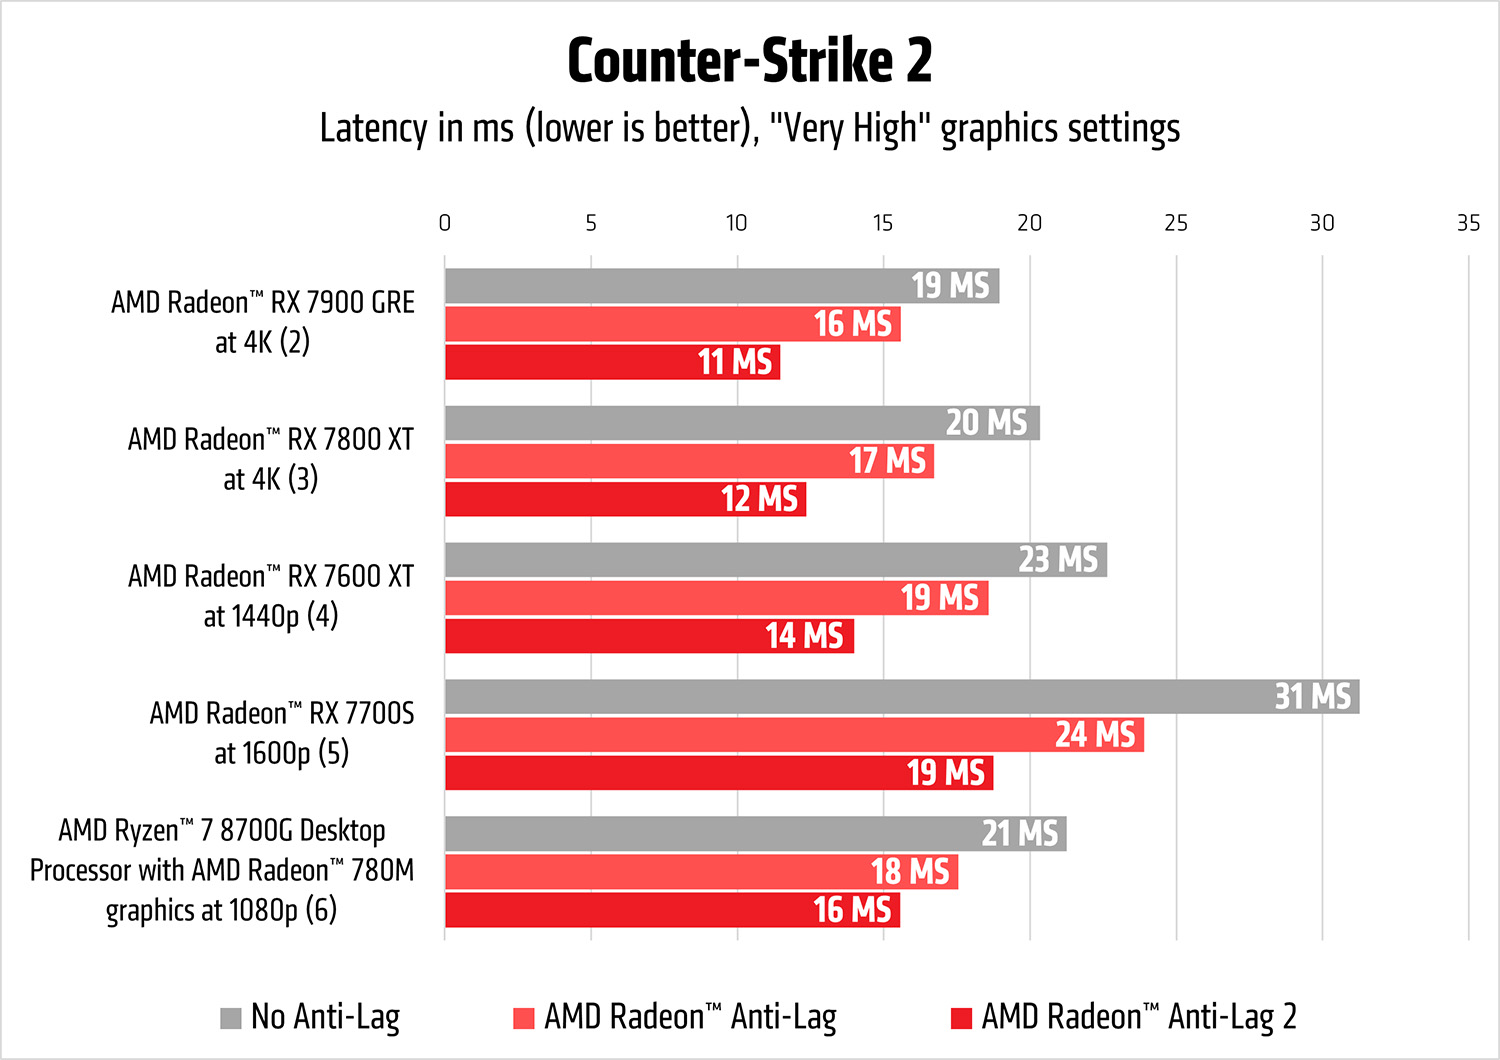 AMD Radeon Anti-Lag 2